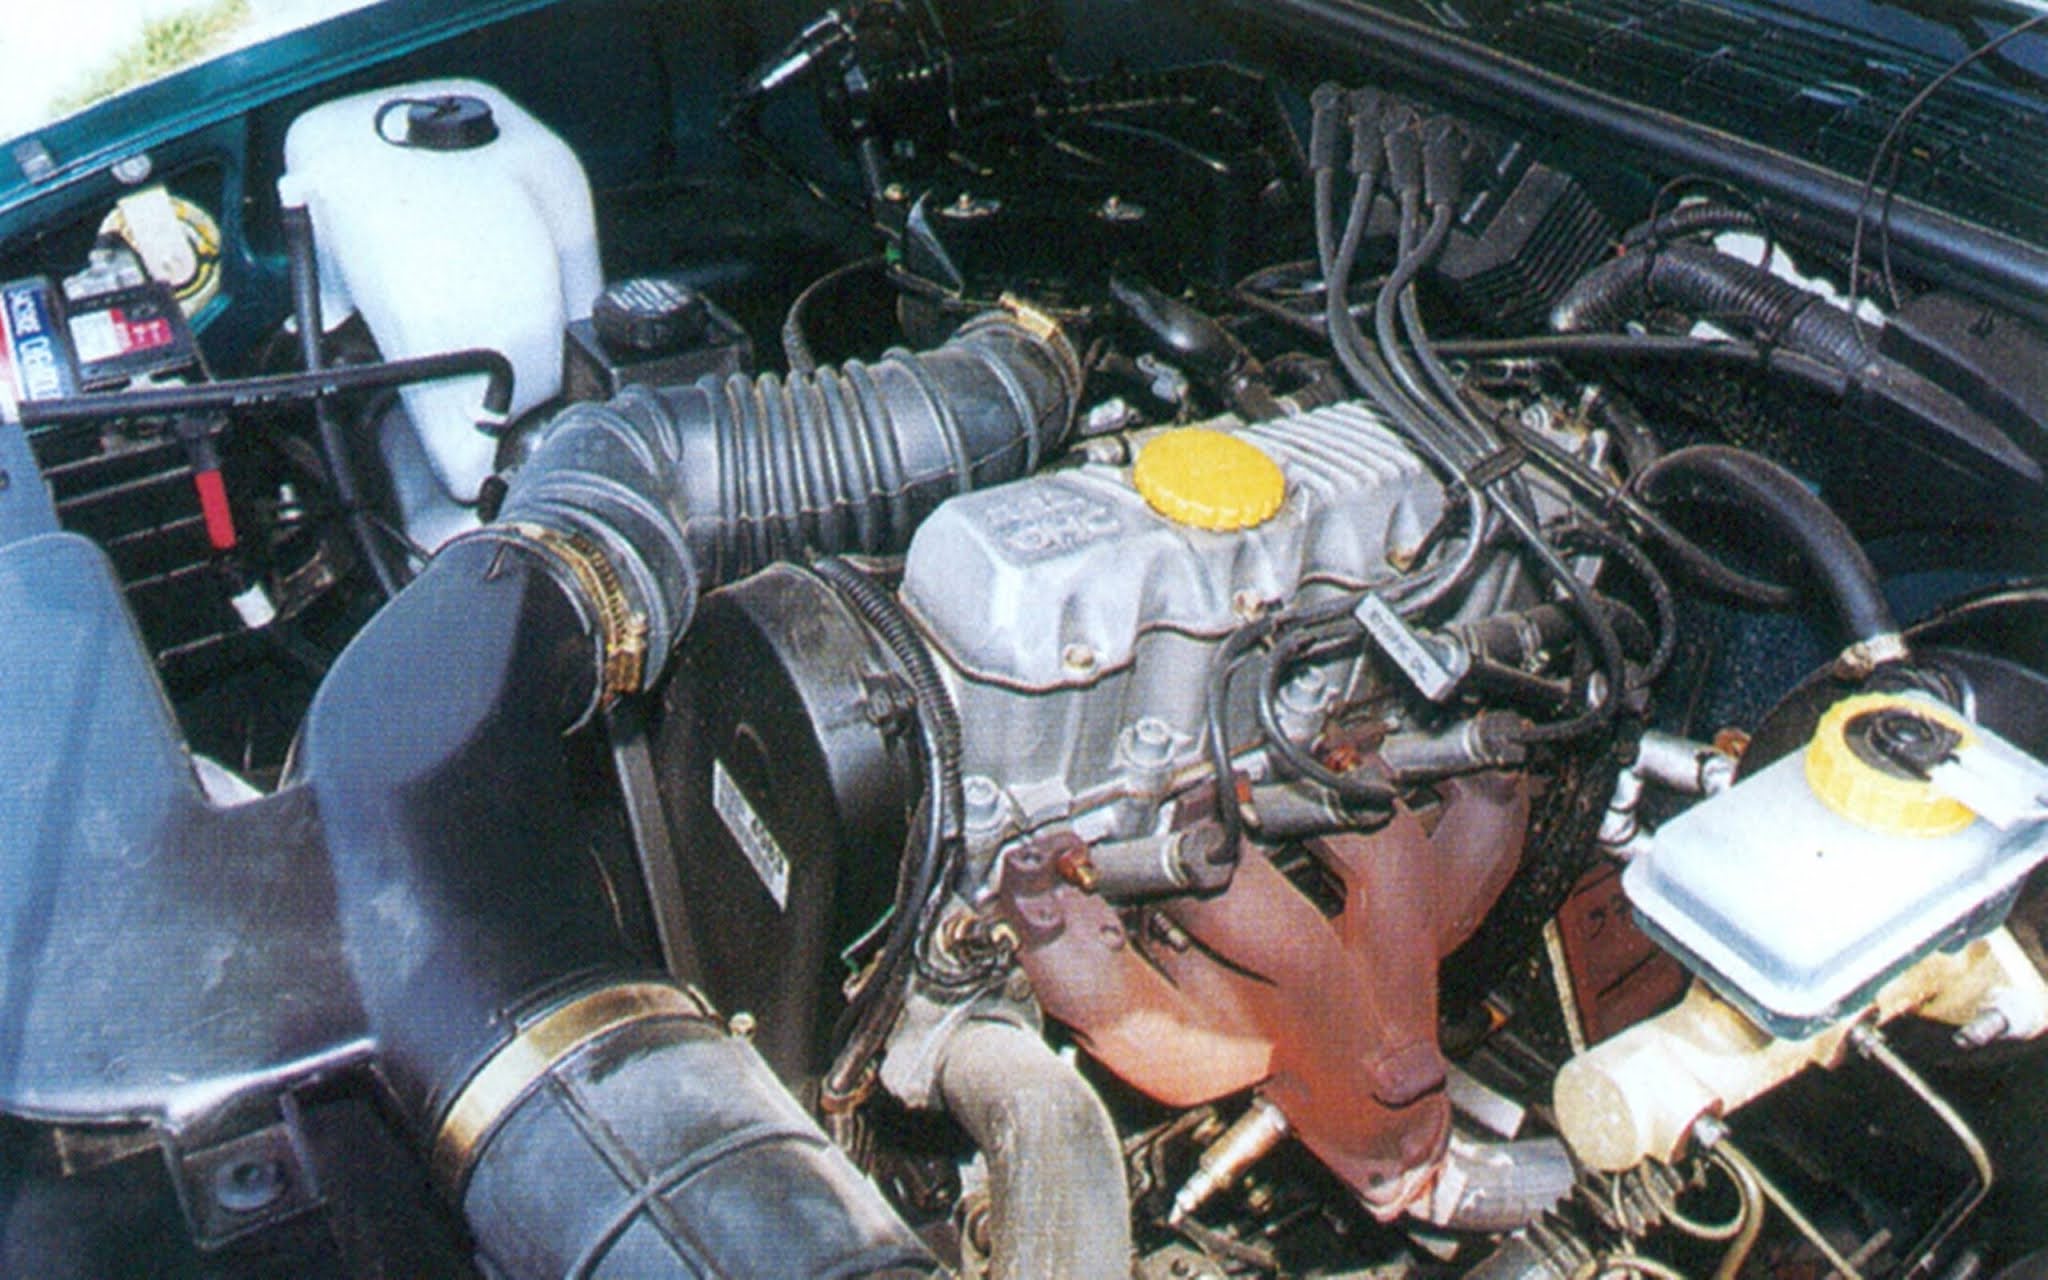 Carros na Web, Chevrolet Blazer DLX 2.2 1996